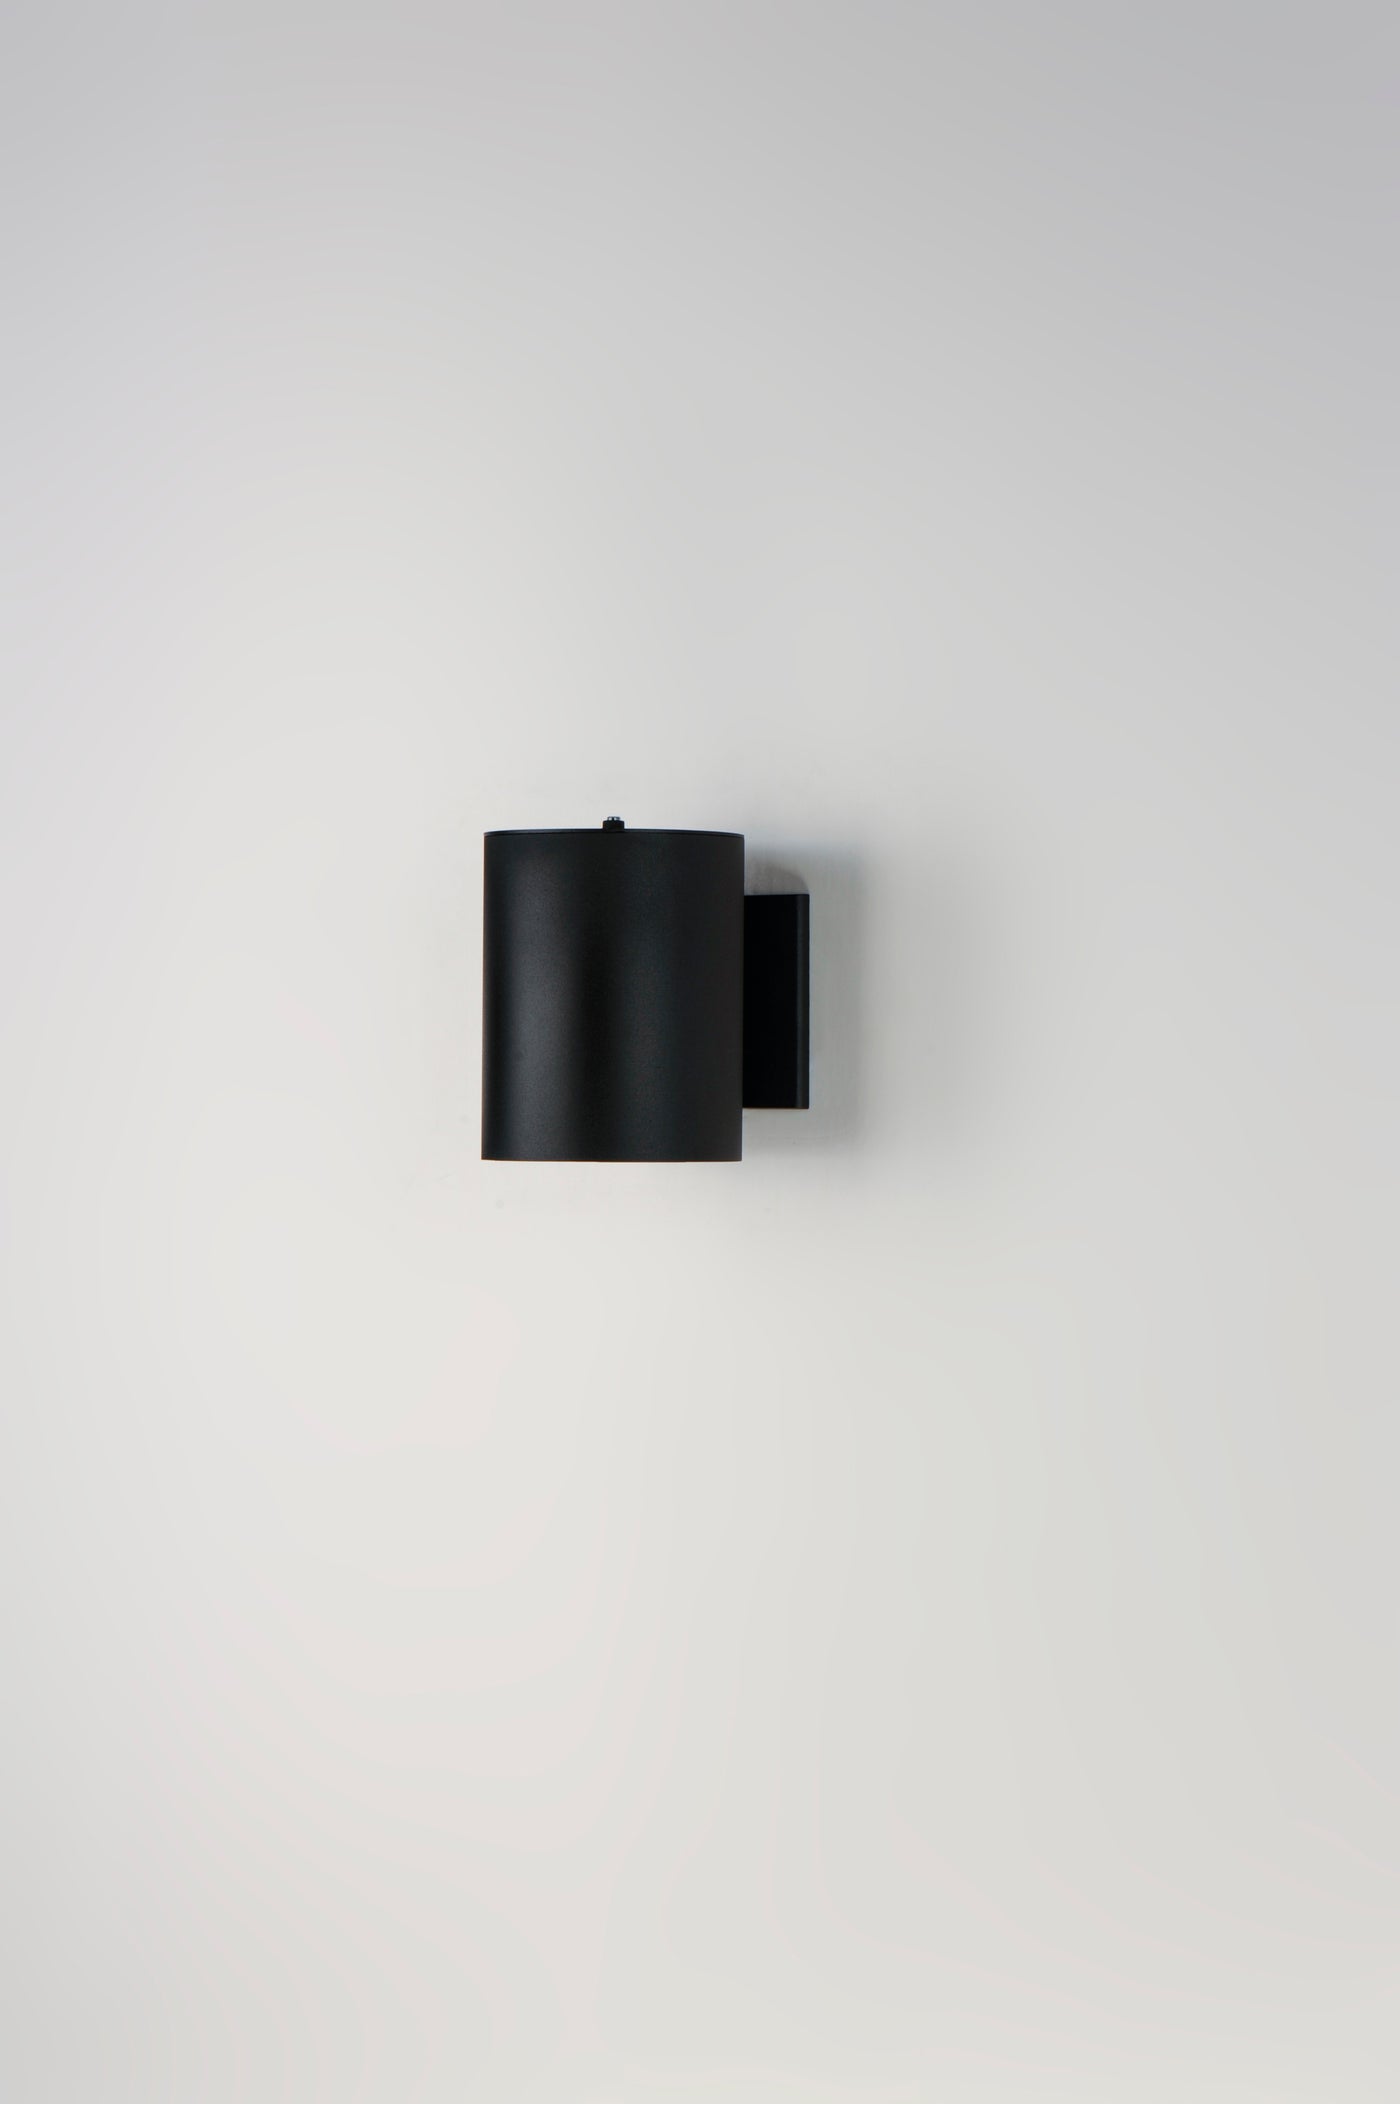 5" Cylinder Down Light, 480 Lumens, 40 Watt, 120 Volts, Brushed Aluminum or Black Finish, Photo Cell Optional